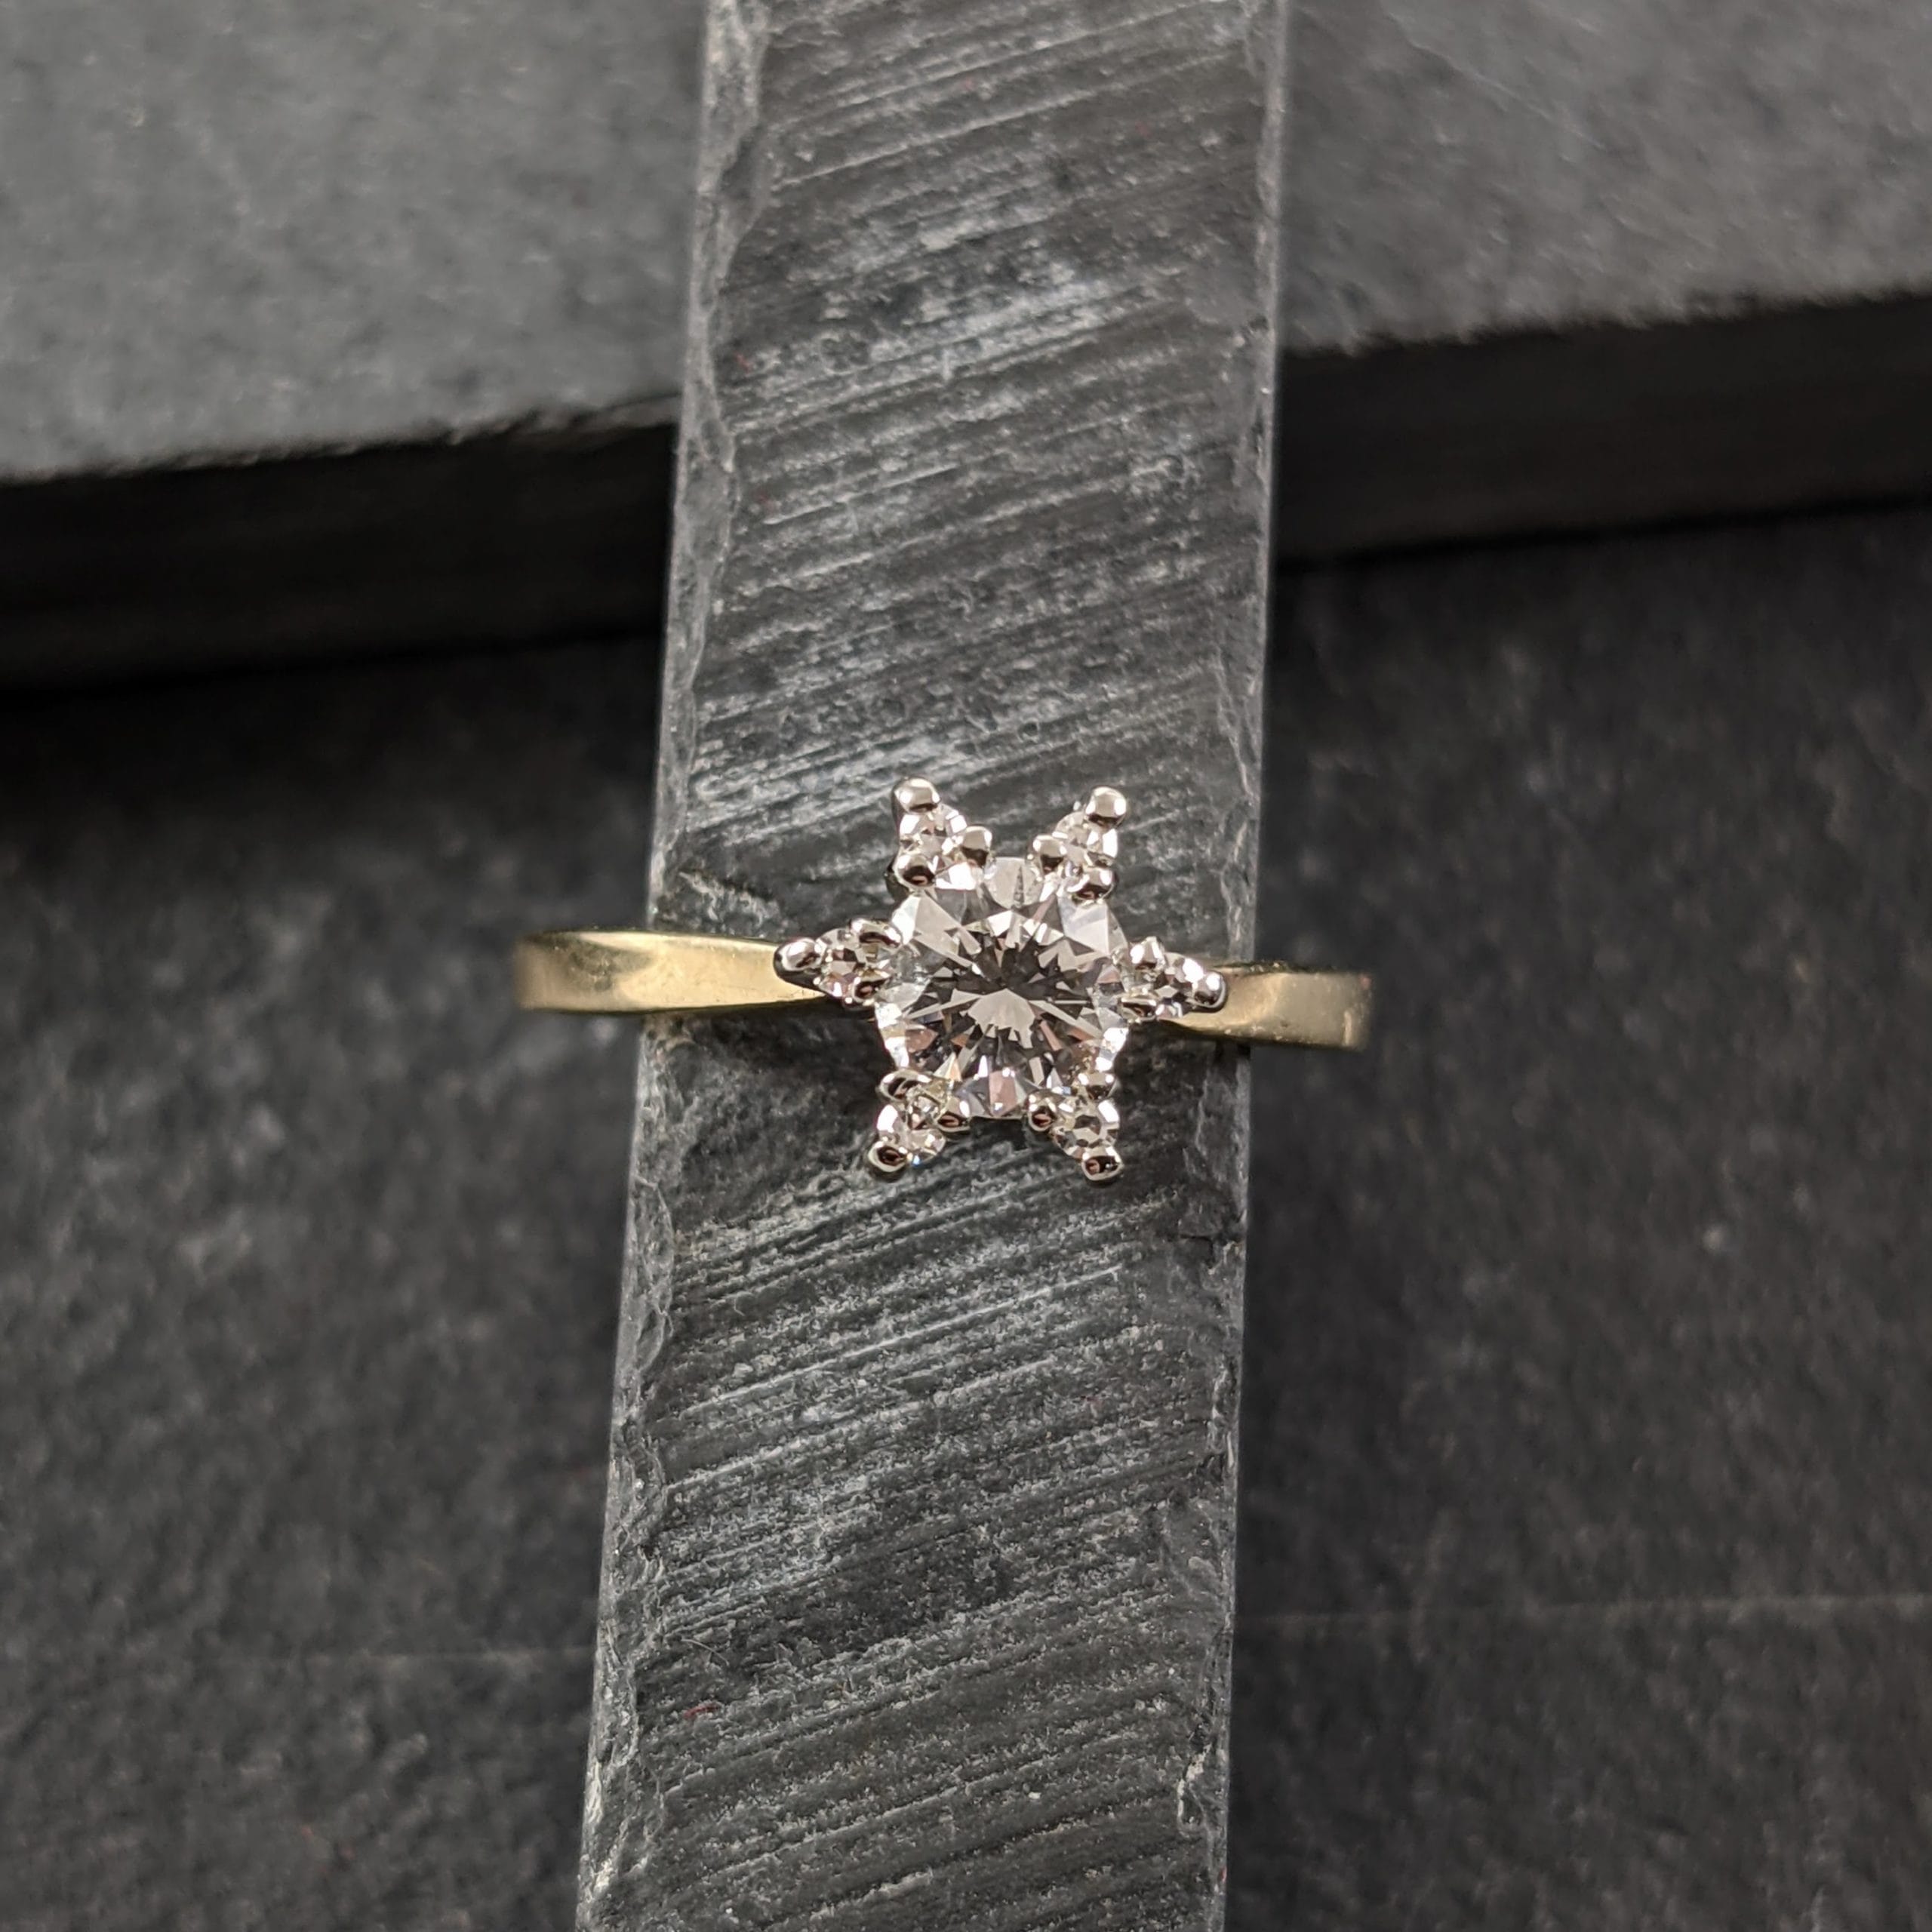 Antique Diamond Star Ring